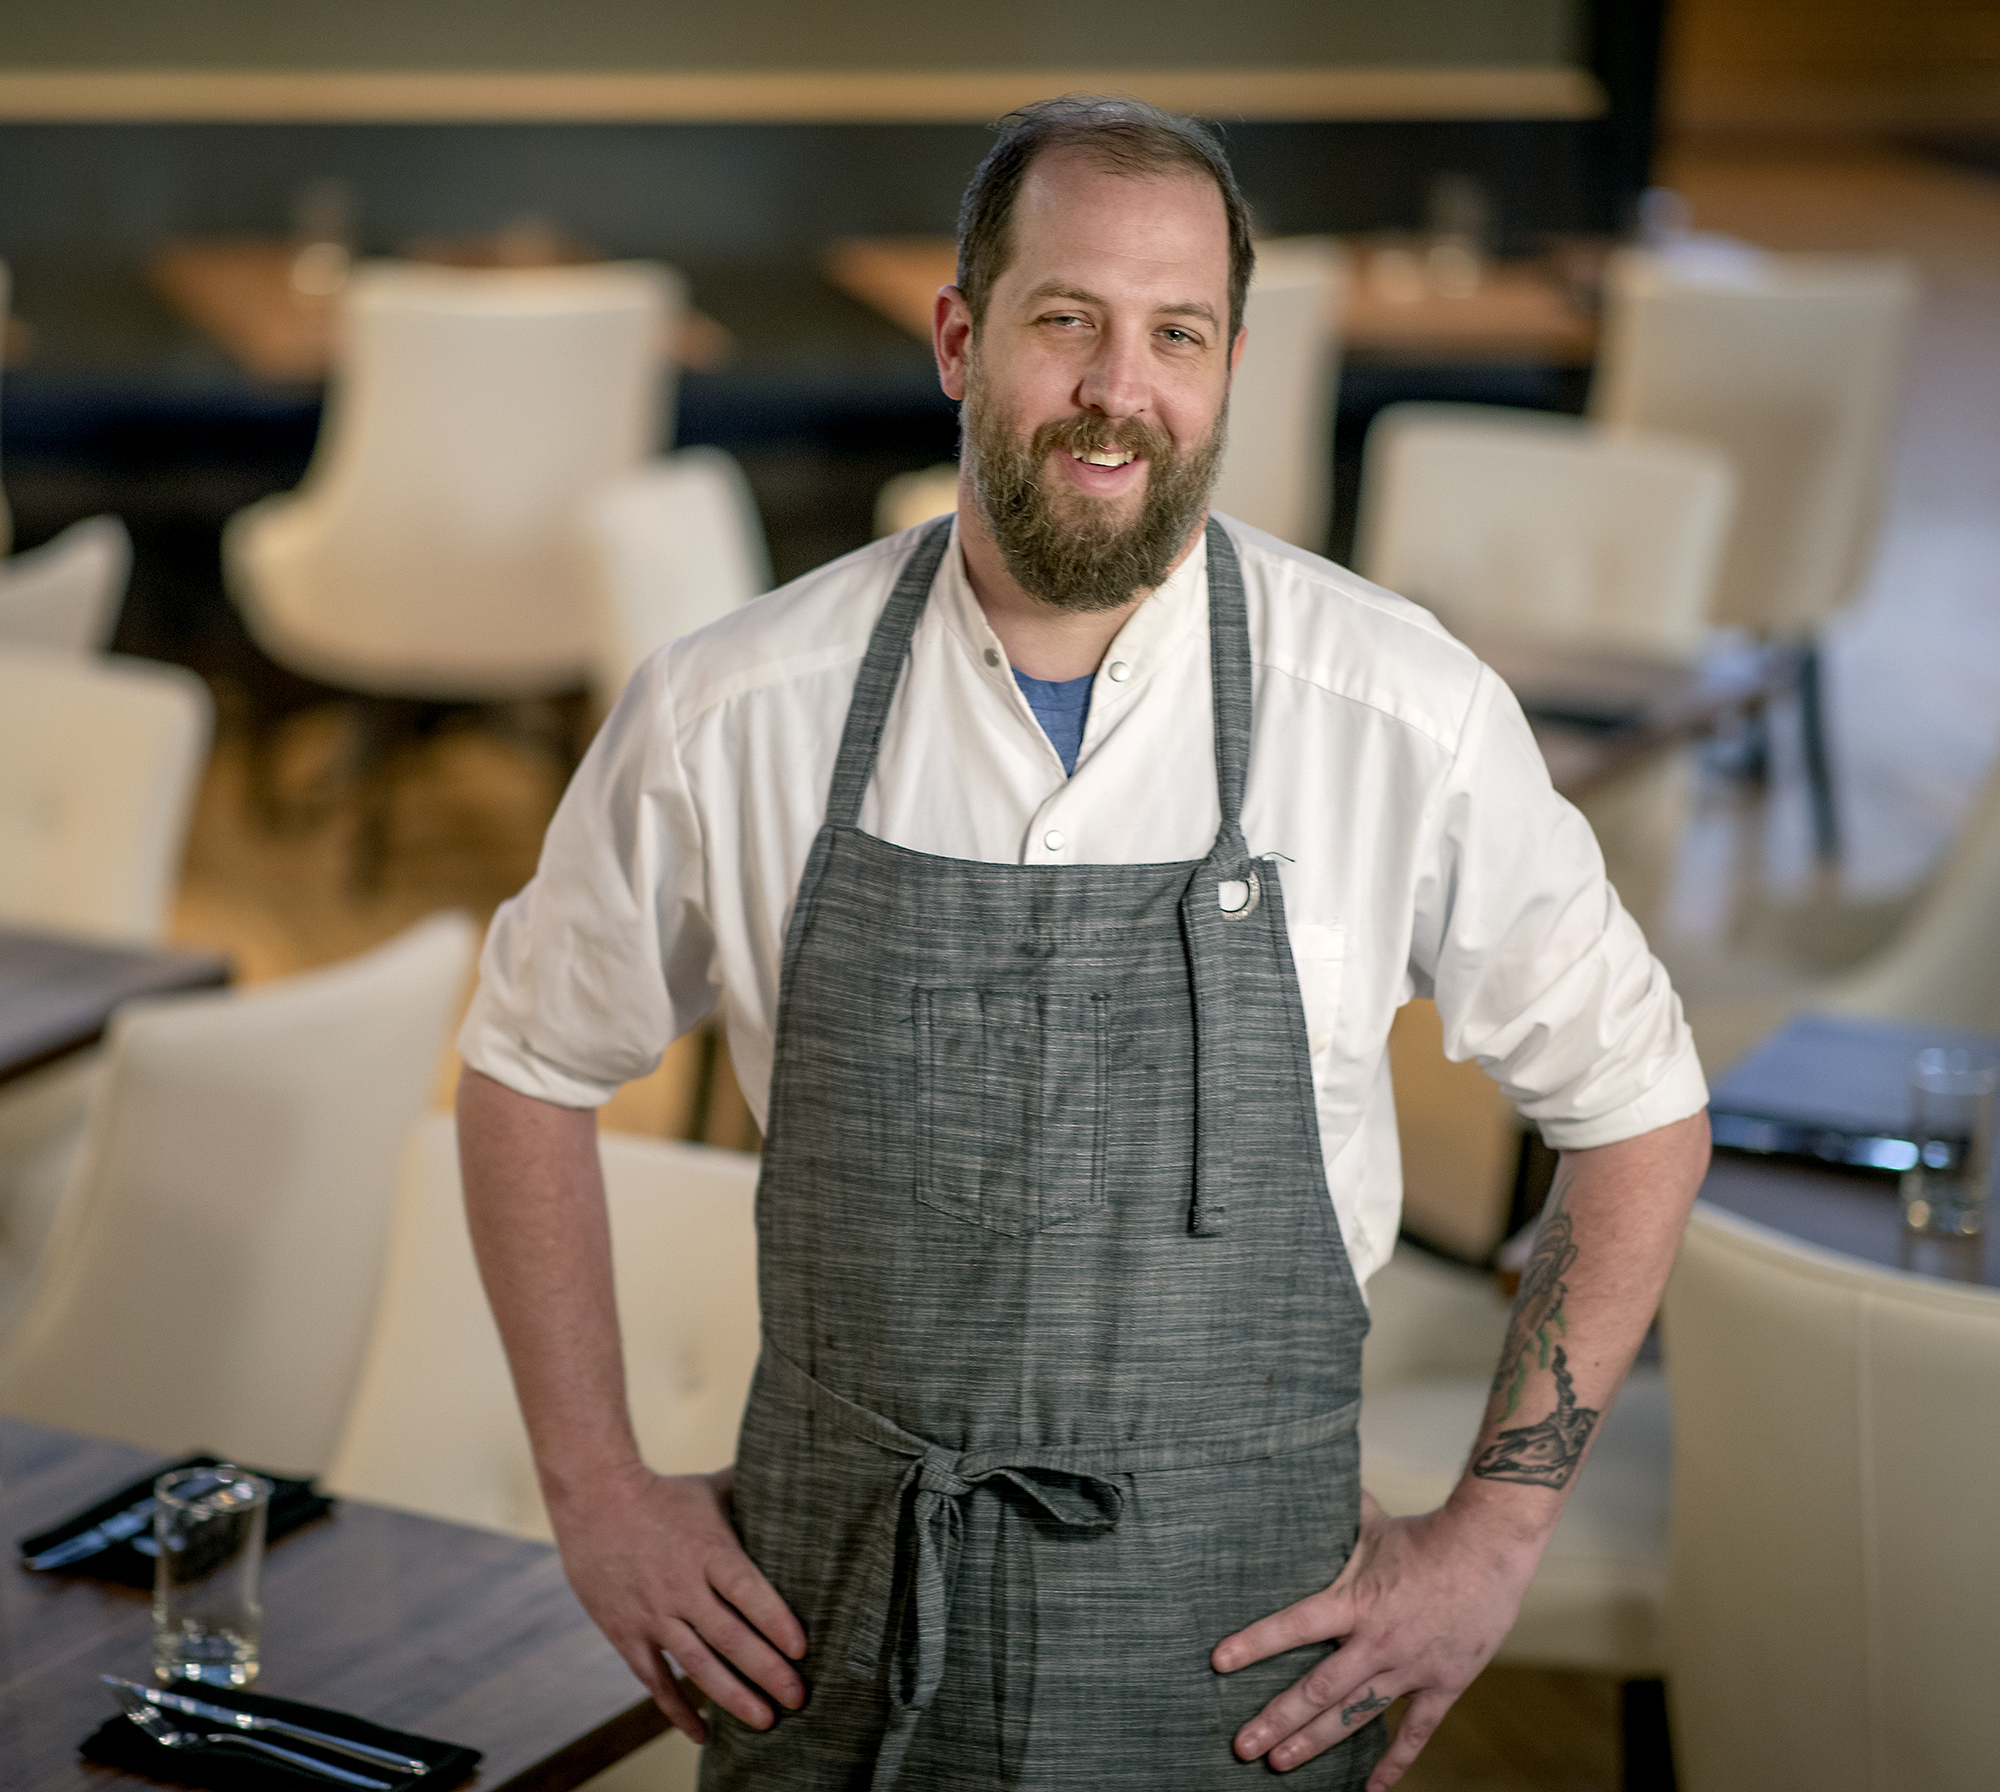 Of his tasting menu, Elephant Bar chef Lucas Almendinger says, “It’s whatever I’m feeling.”